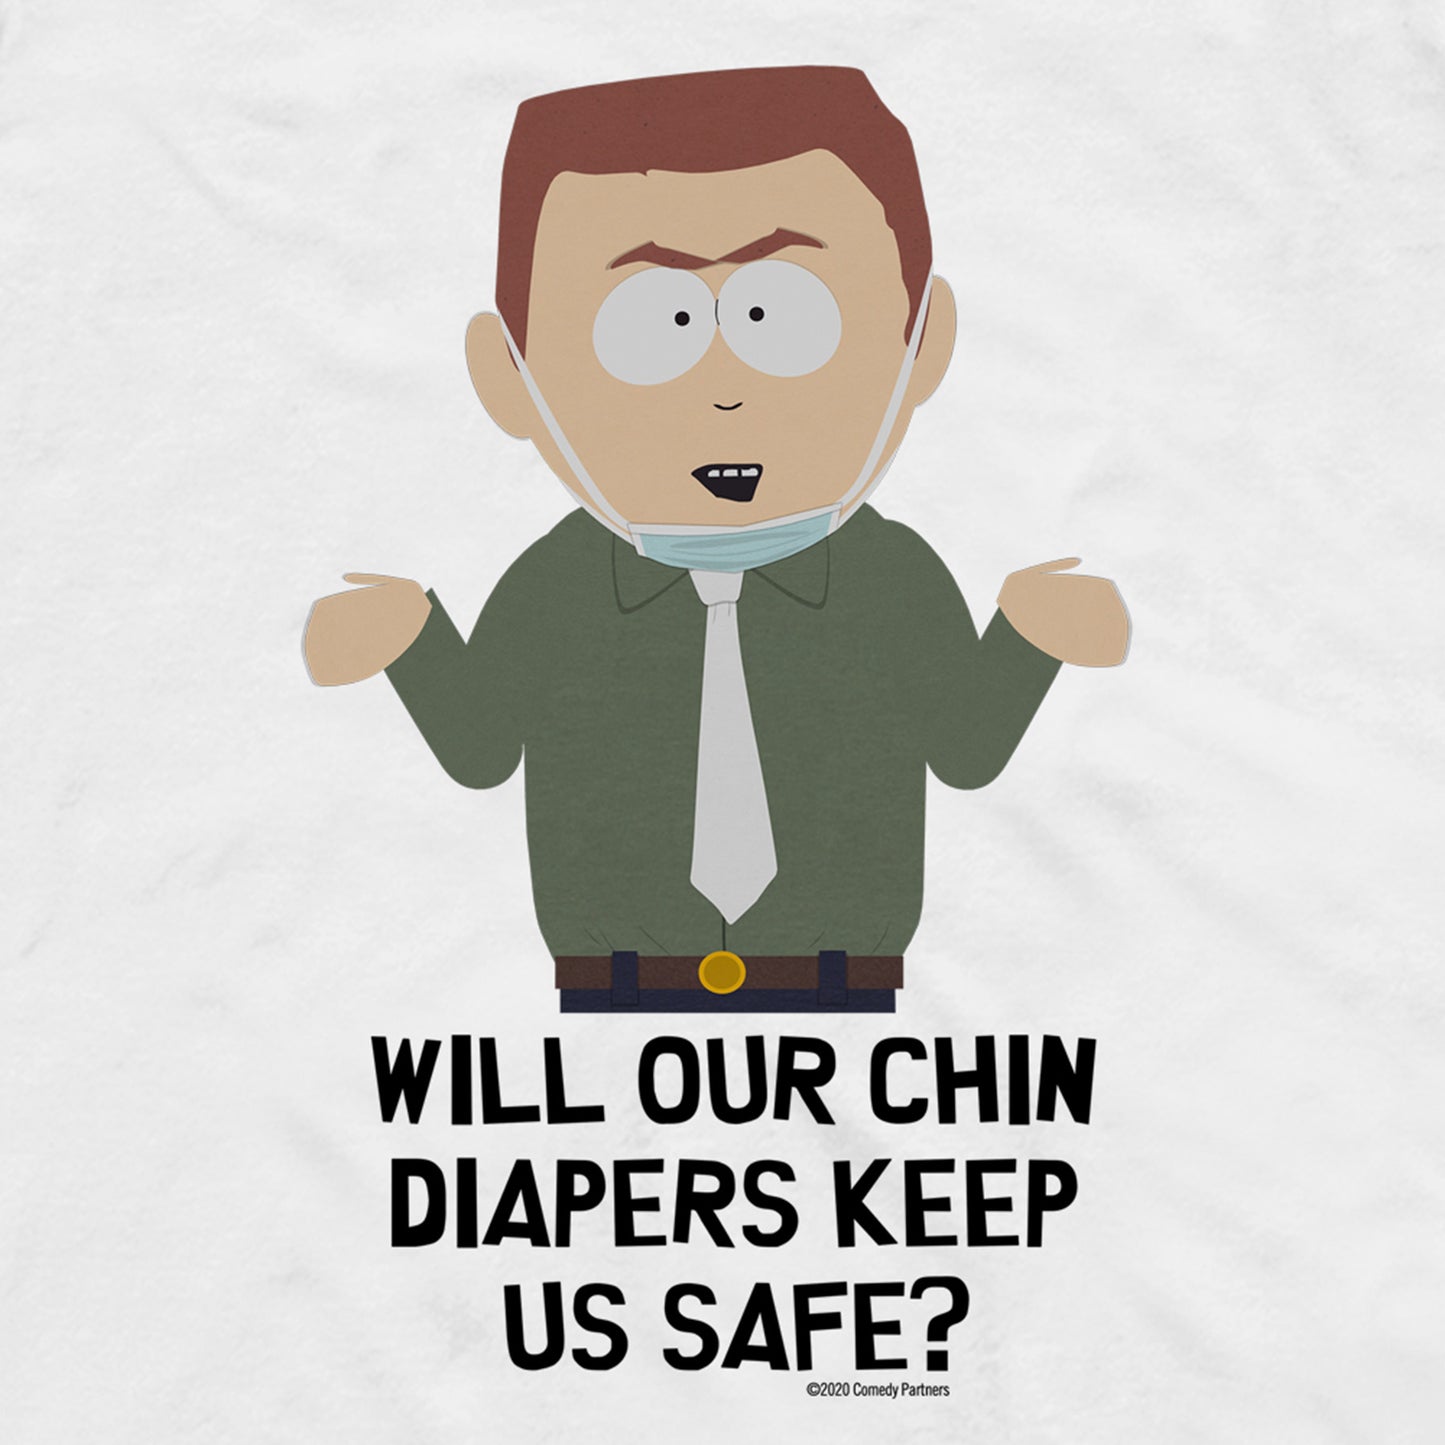 South Park Sudadera con capucha Chin Diapers